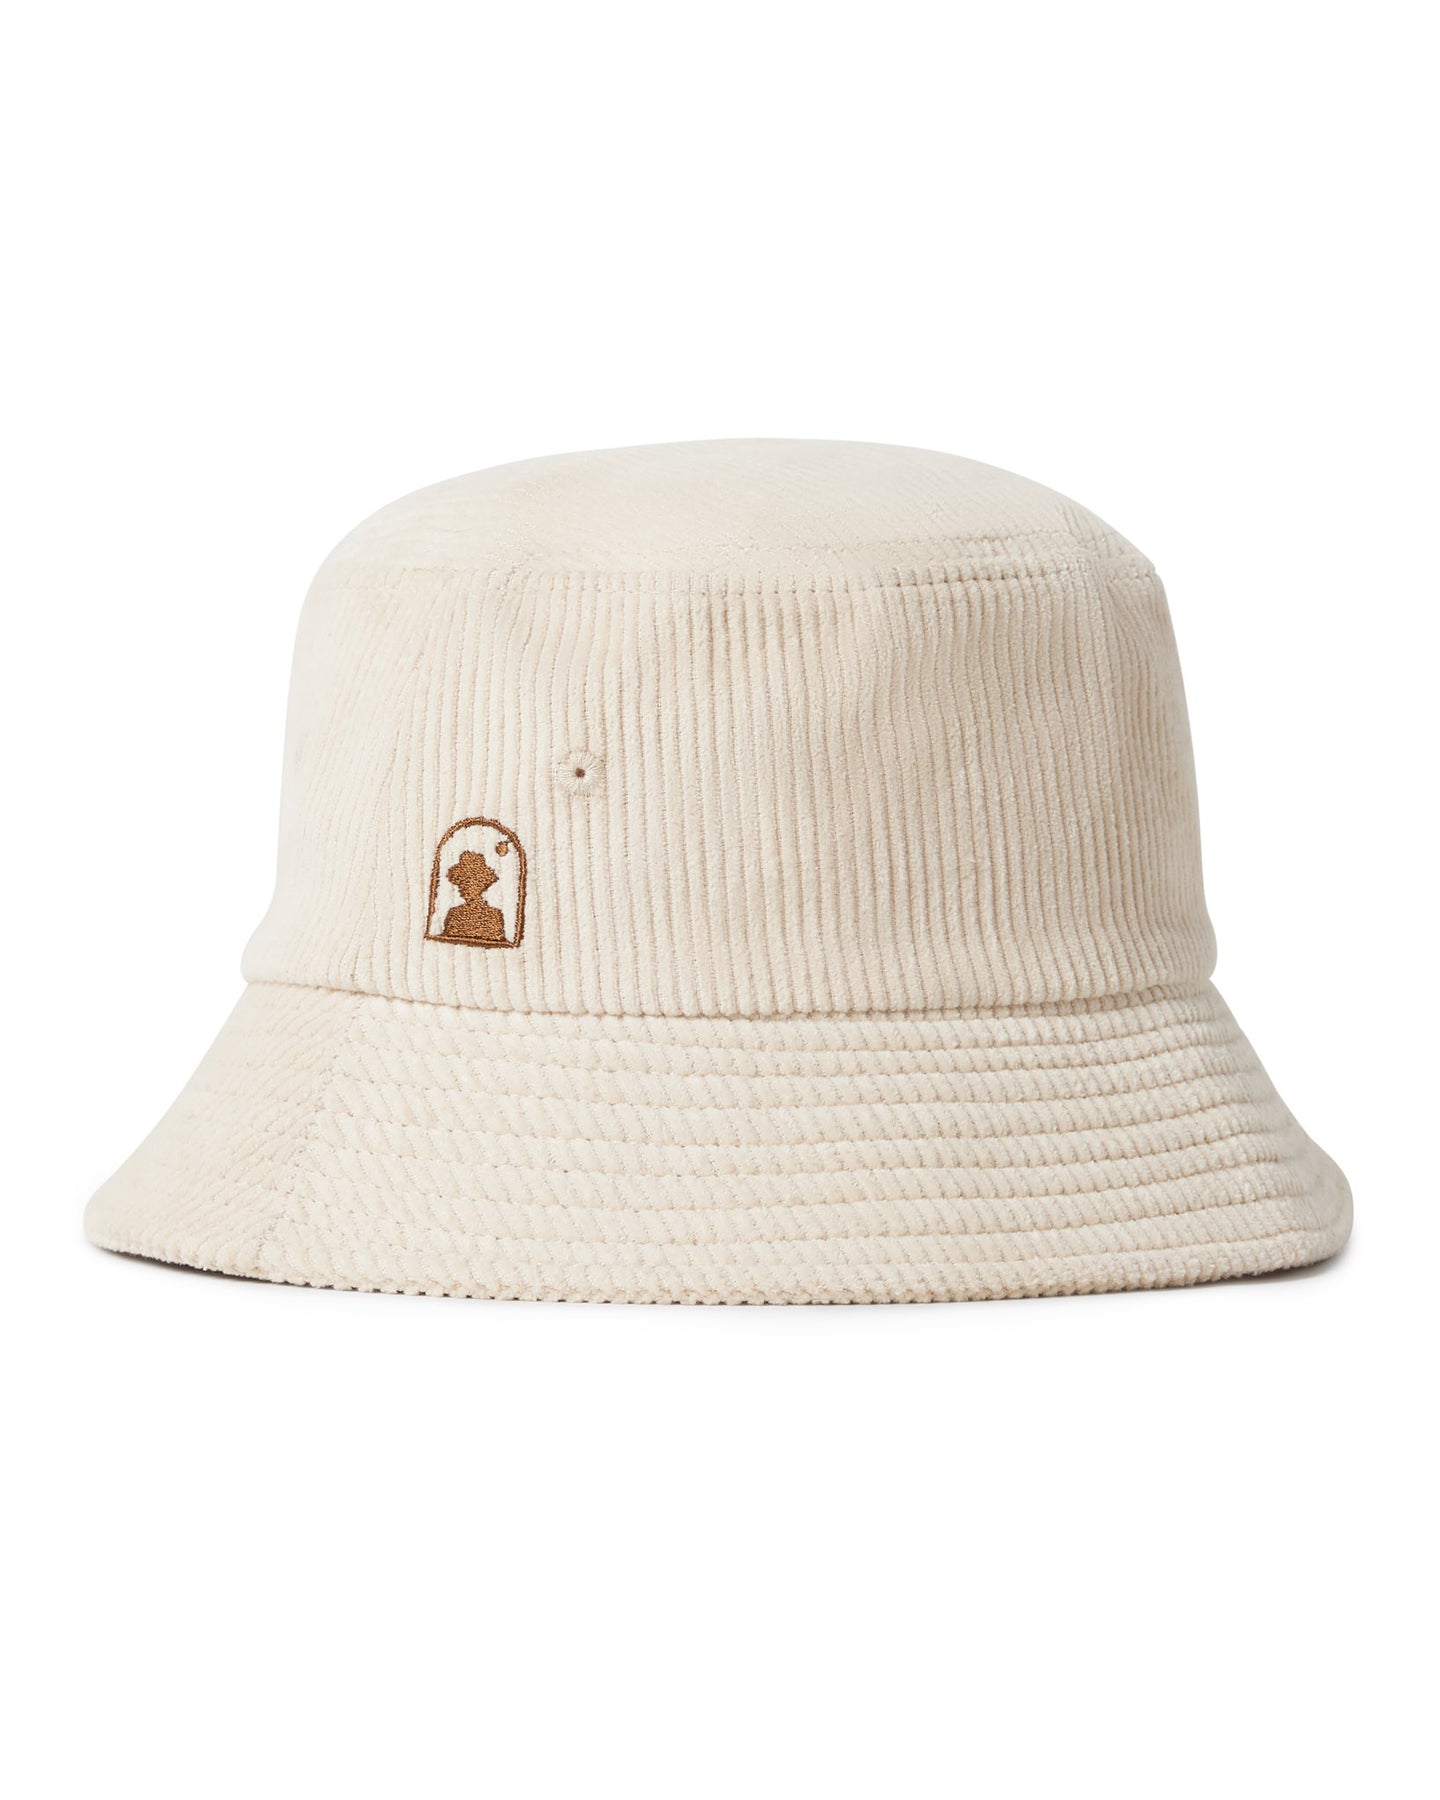 ERICKA White Corduroy Satin Lined Bucket Hat Cap Spring Summer Hat